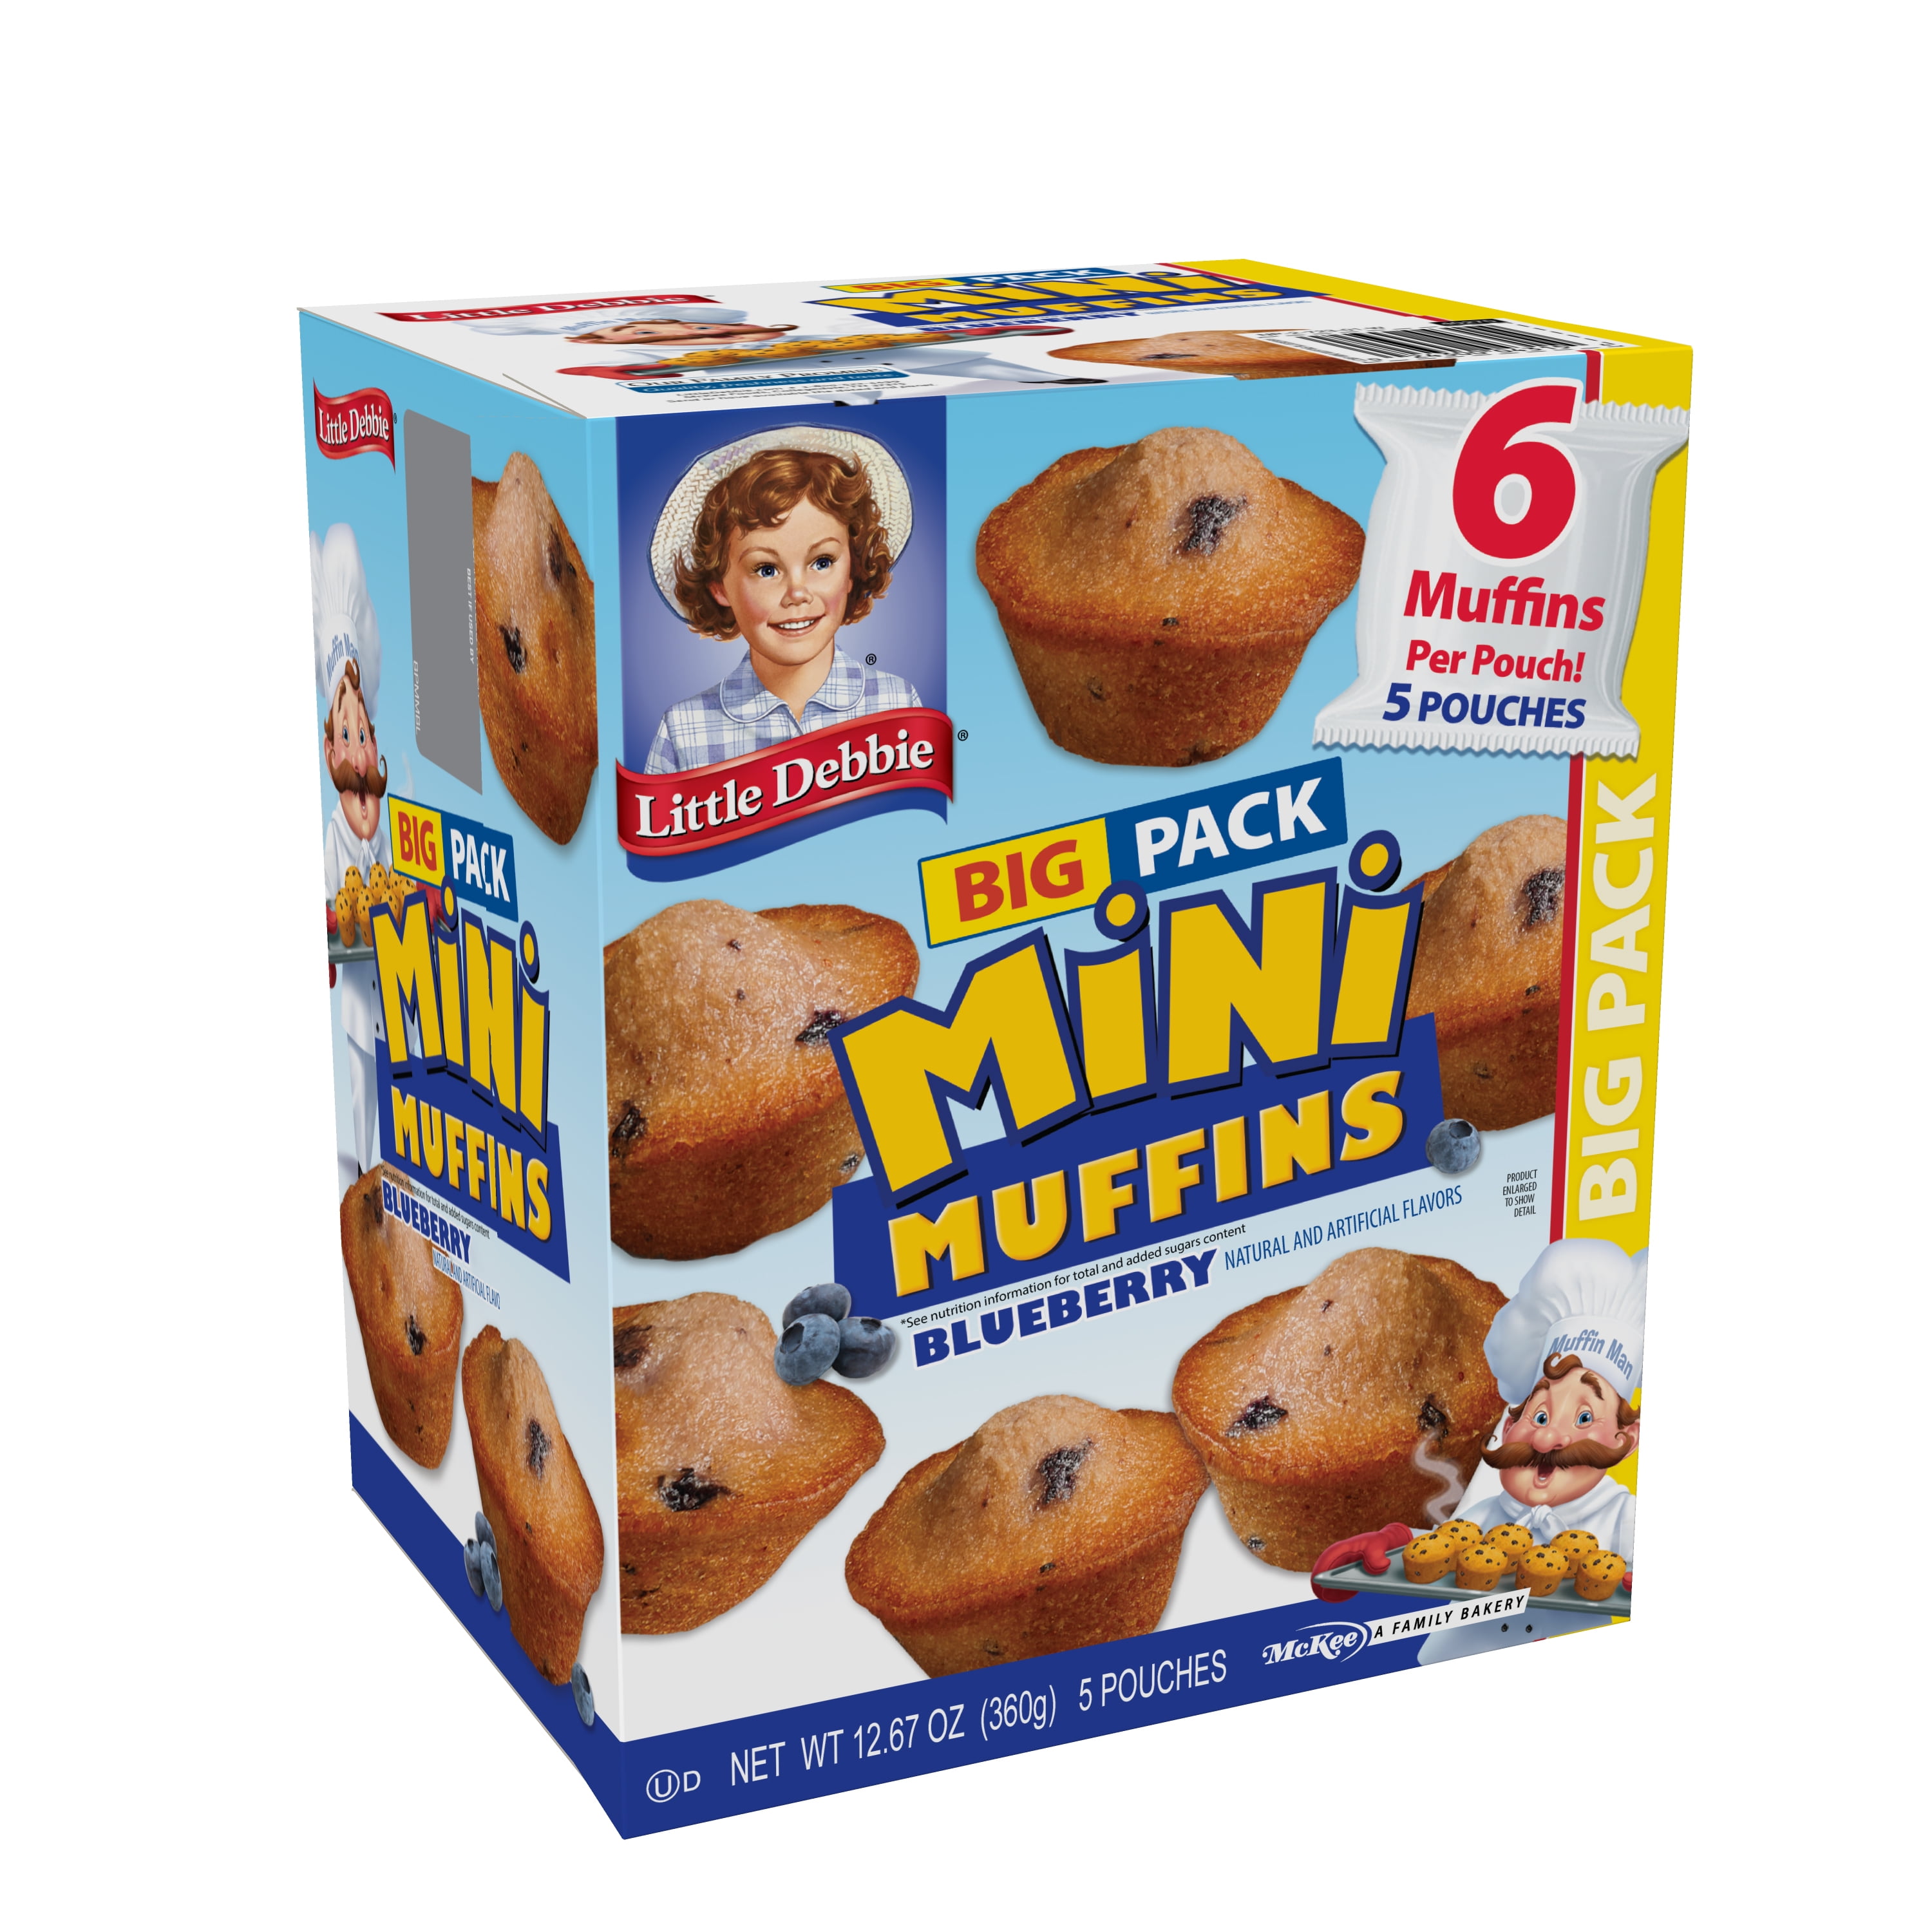 Snack Cakes, Little Debbie Big Pack Mini Muffins (Blueberry) - Walmart.com